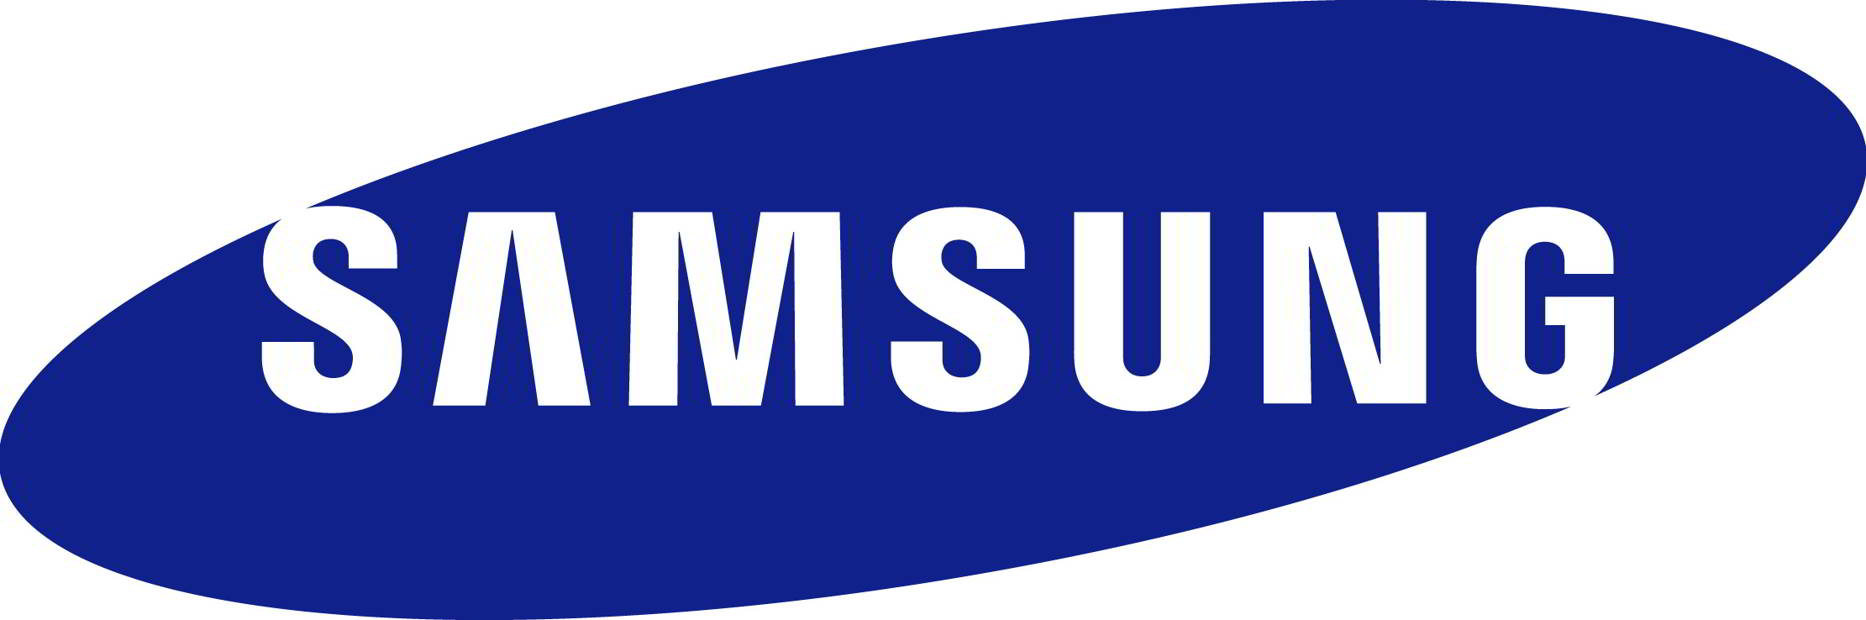 Samsung ar putea concedia 30 din angajati